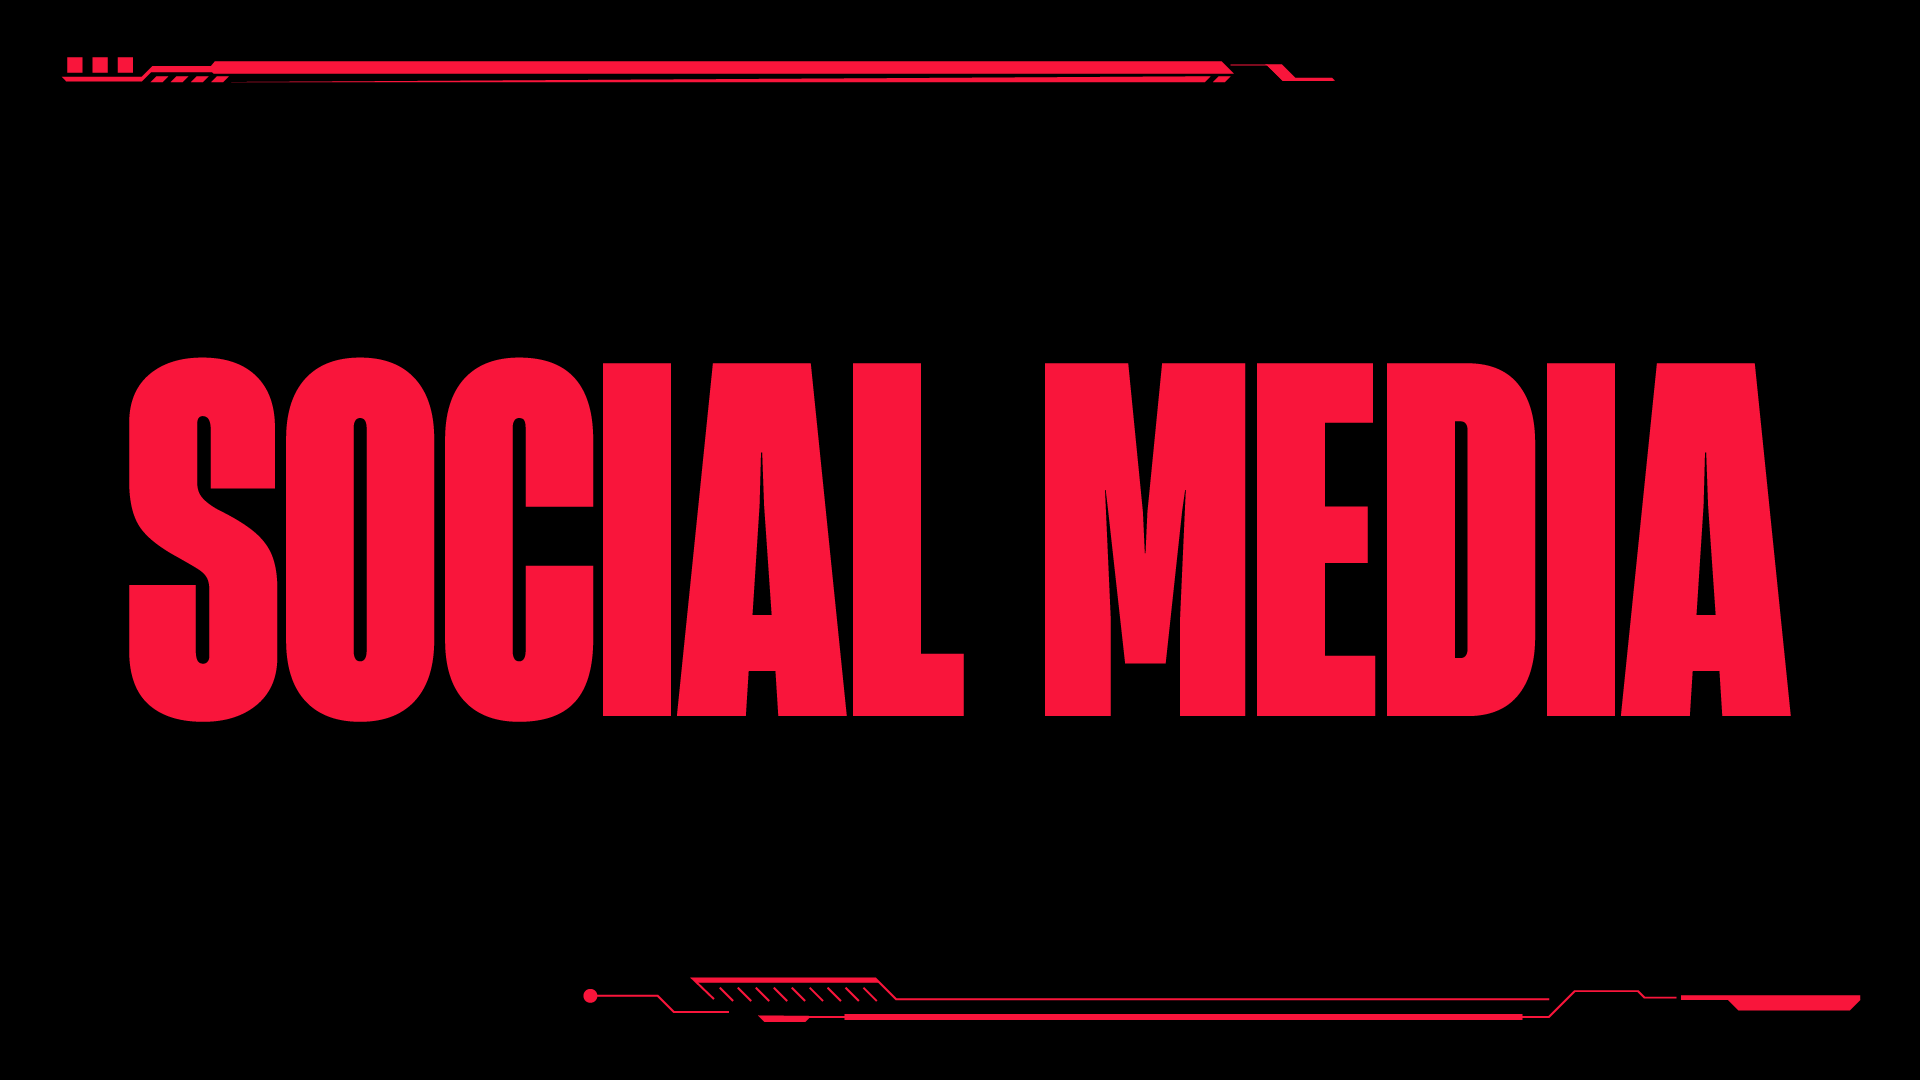 SOCIAL MEDIA

GAFE DE LIMA

CAFETERIA

 

77777 + PROYECTO INSTITUCIONAL